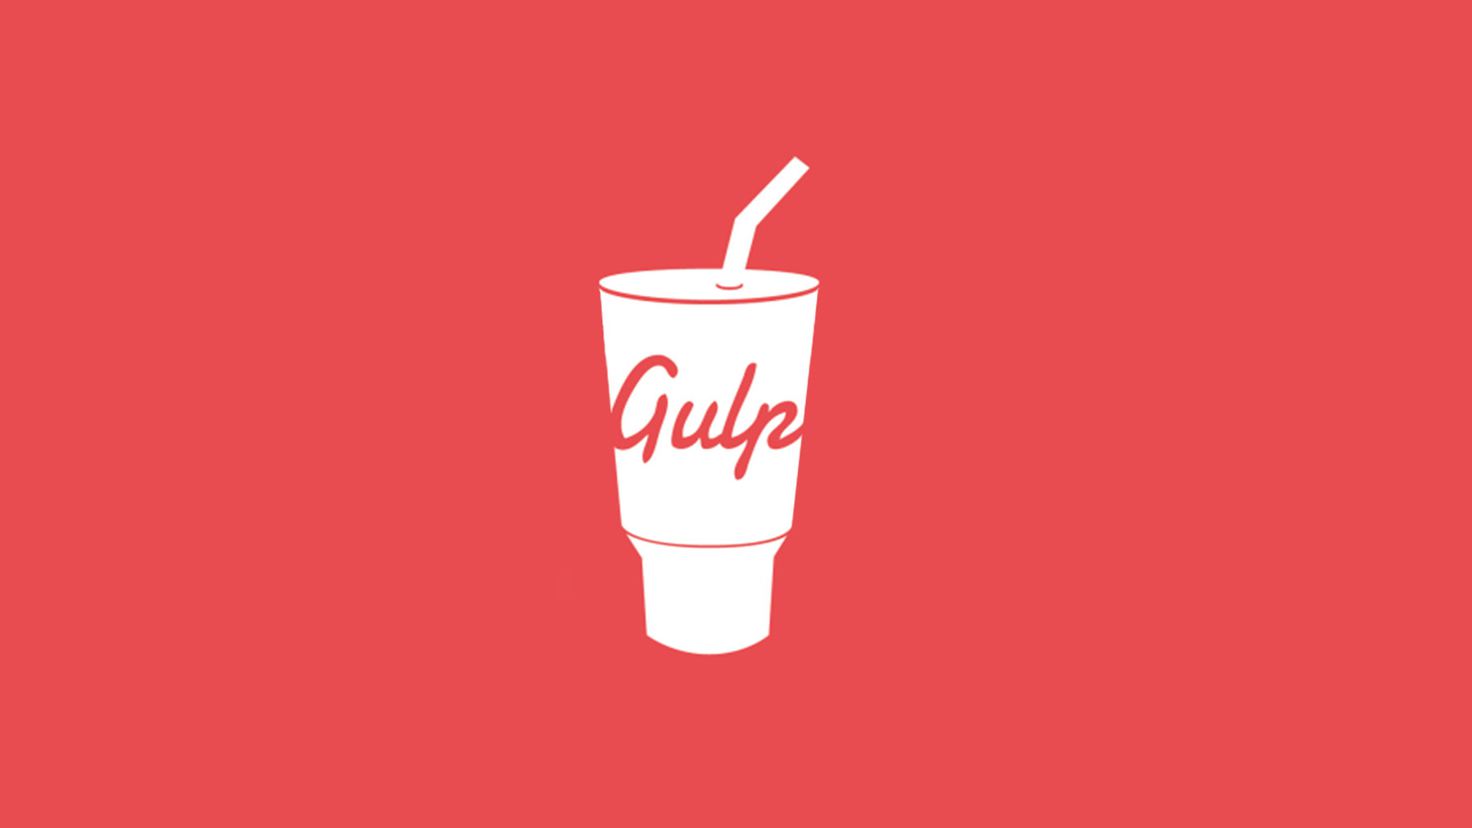 Getting Started with Gulp Javascript Task Runner